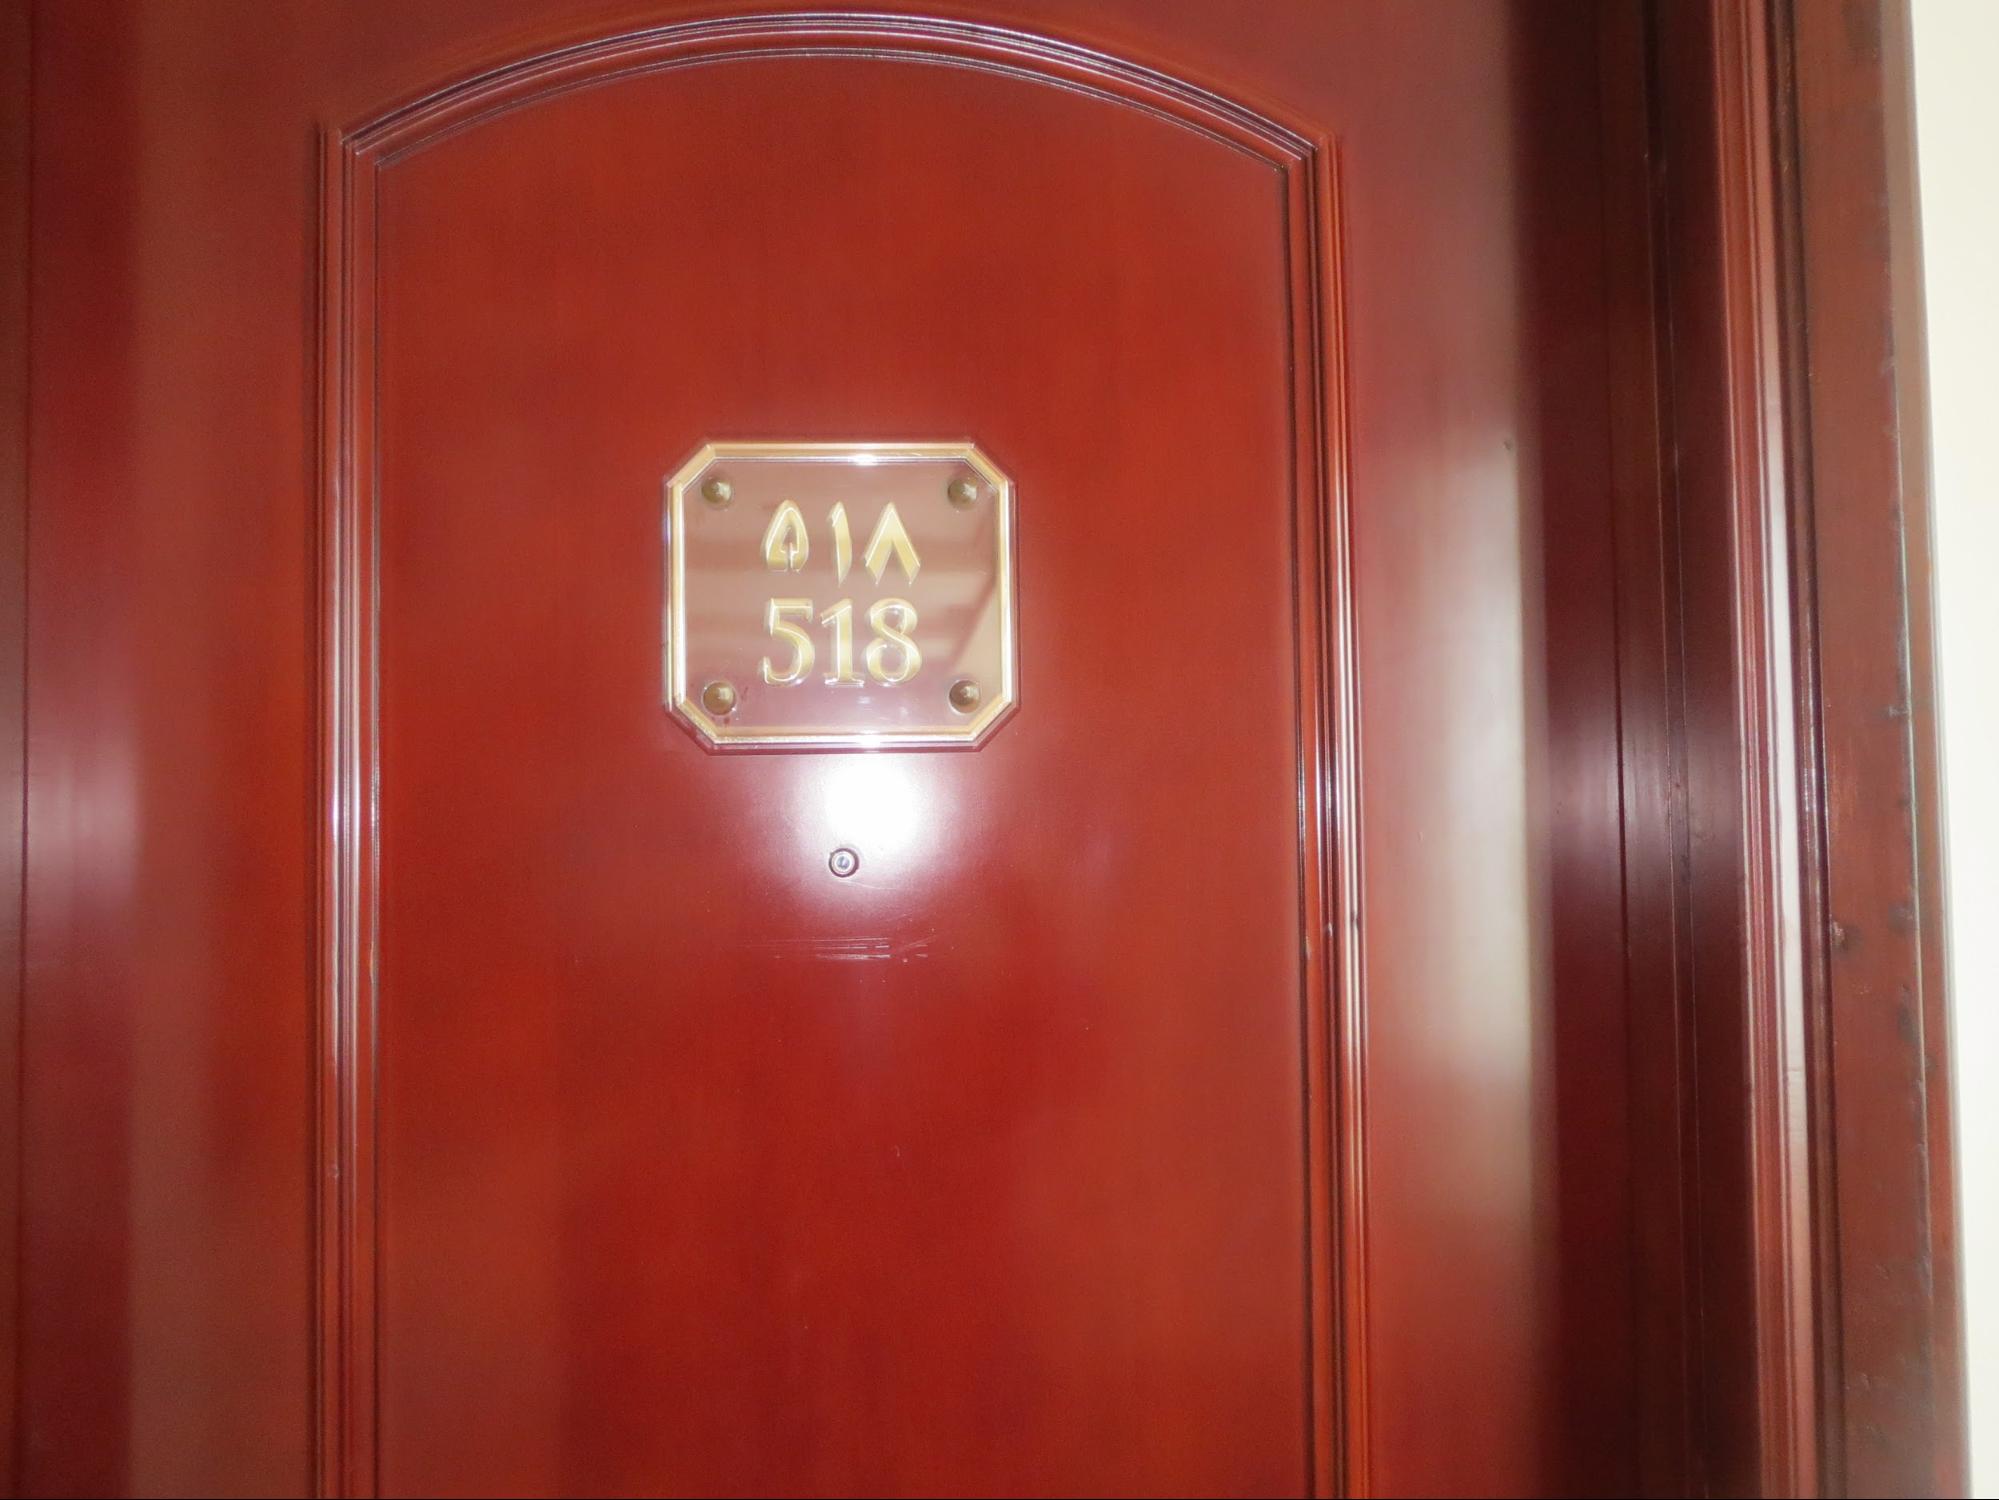 Kempinski Hotel, Ajman Review - Spacious Leisure club room - Room Number – 518